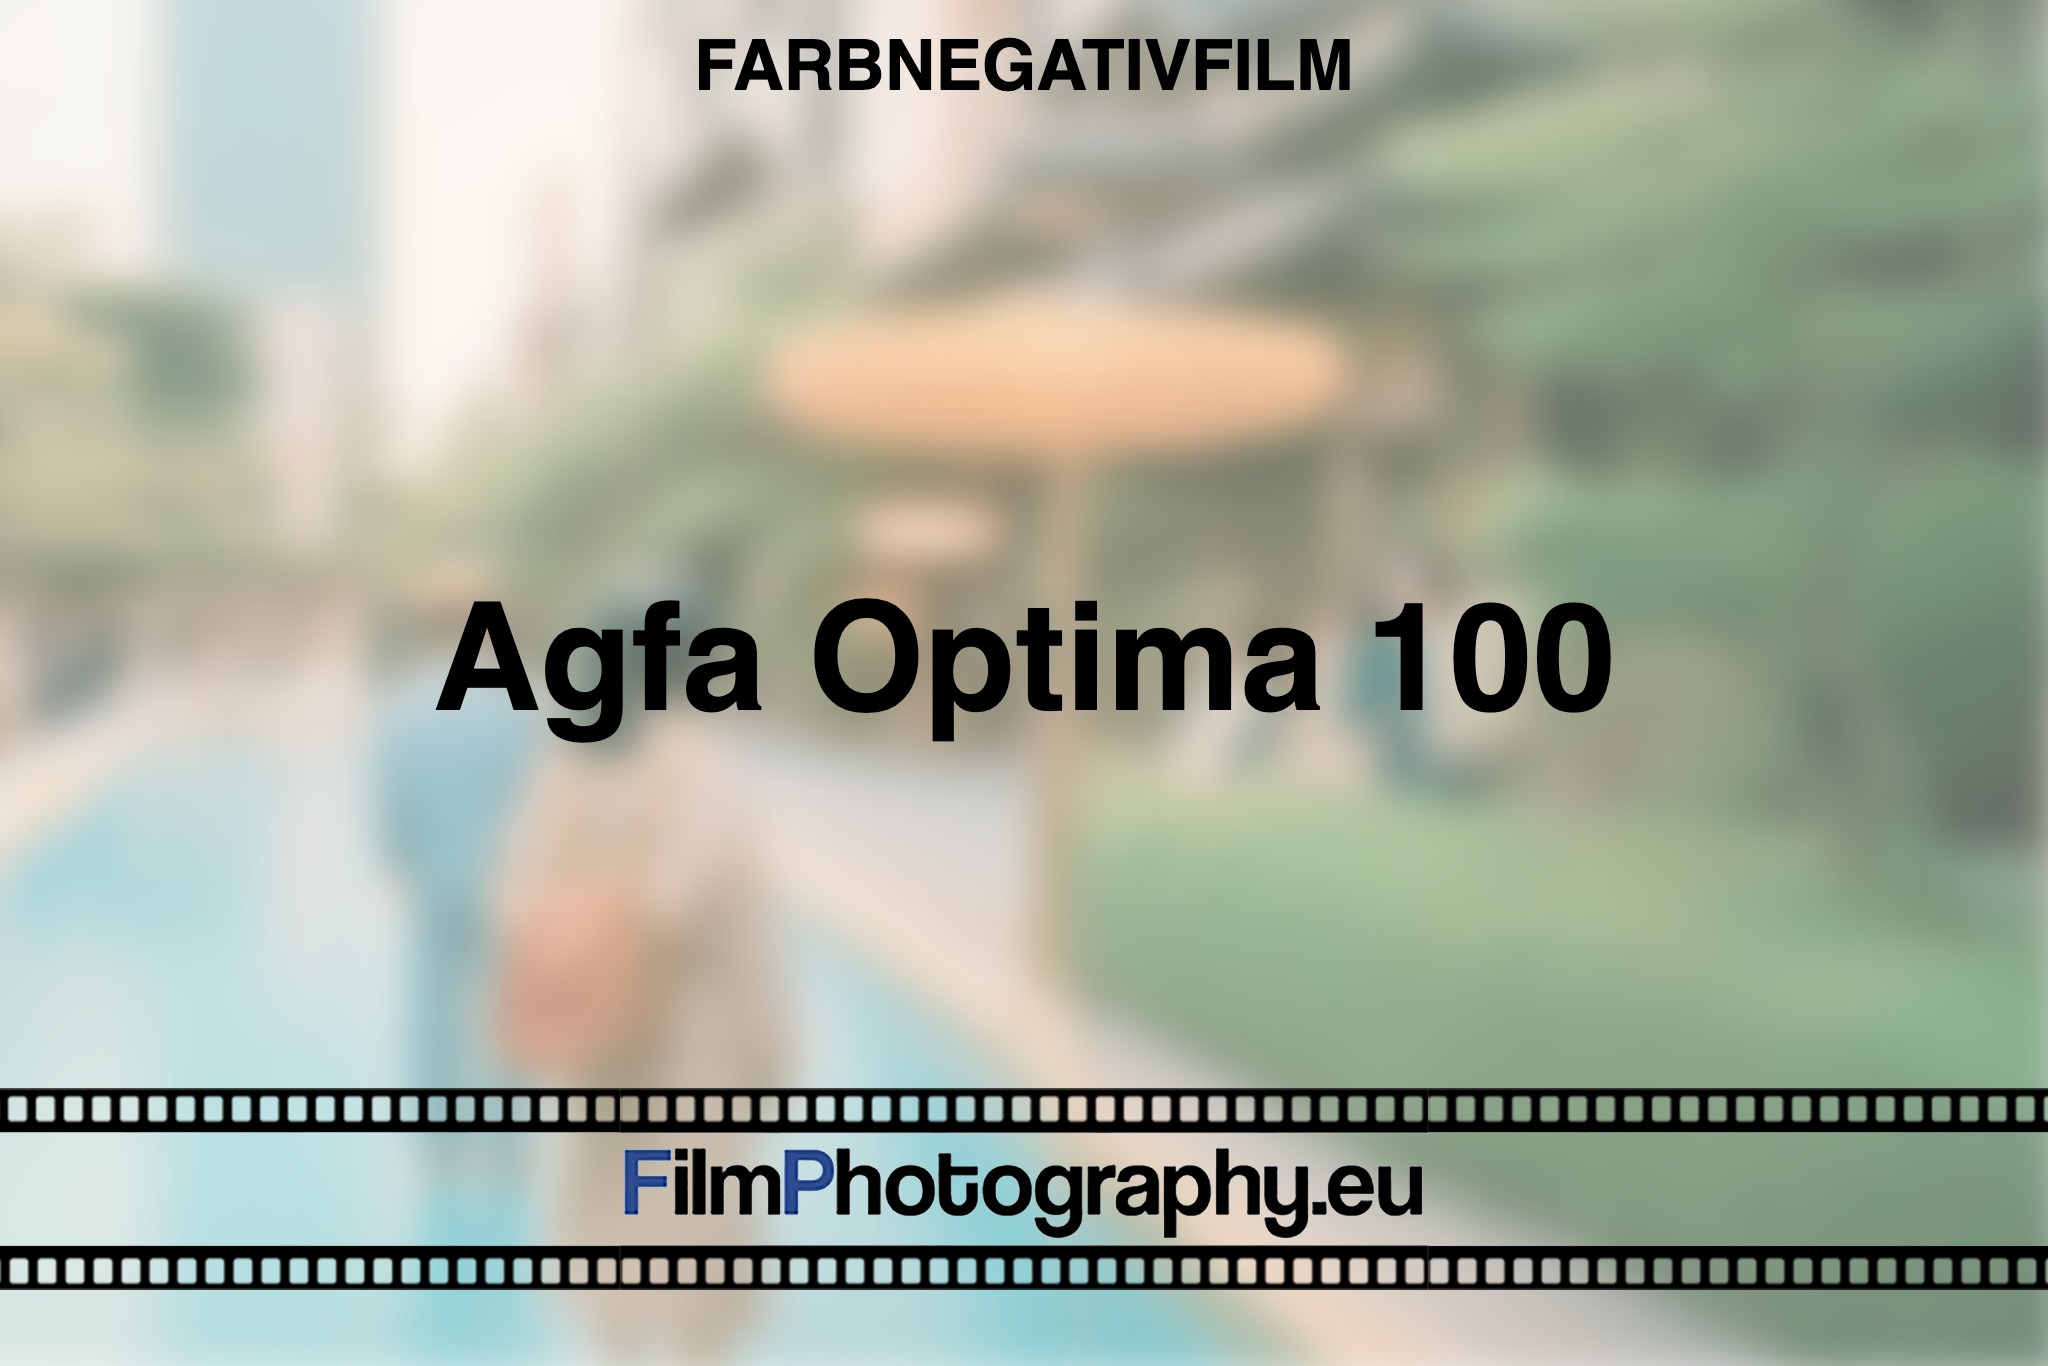 agfa-optima-100-farbnegativfilm-bnv